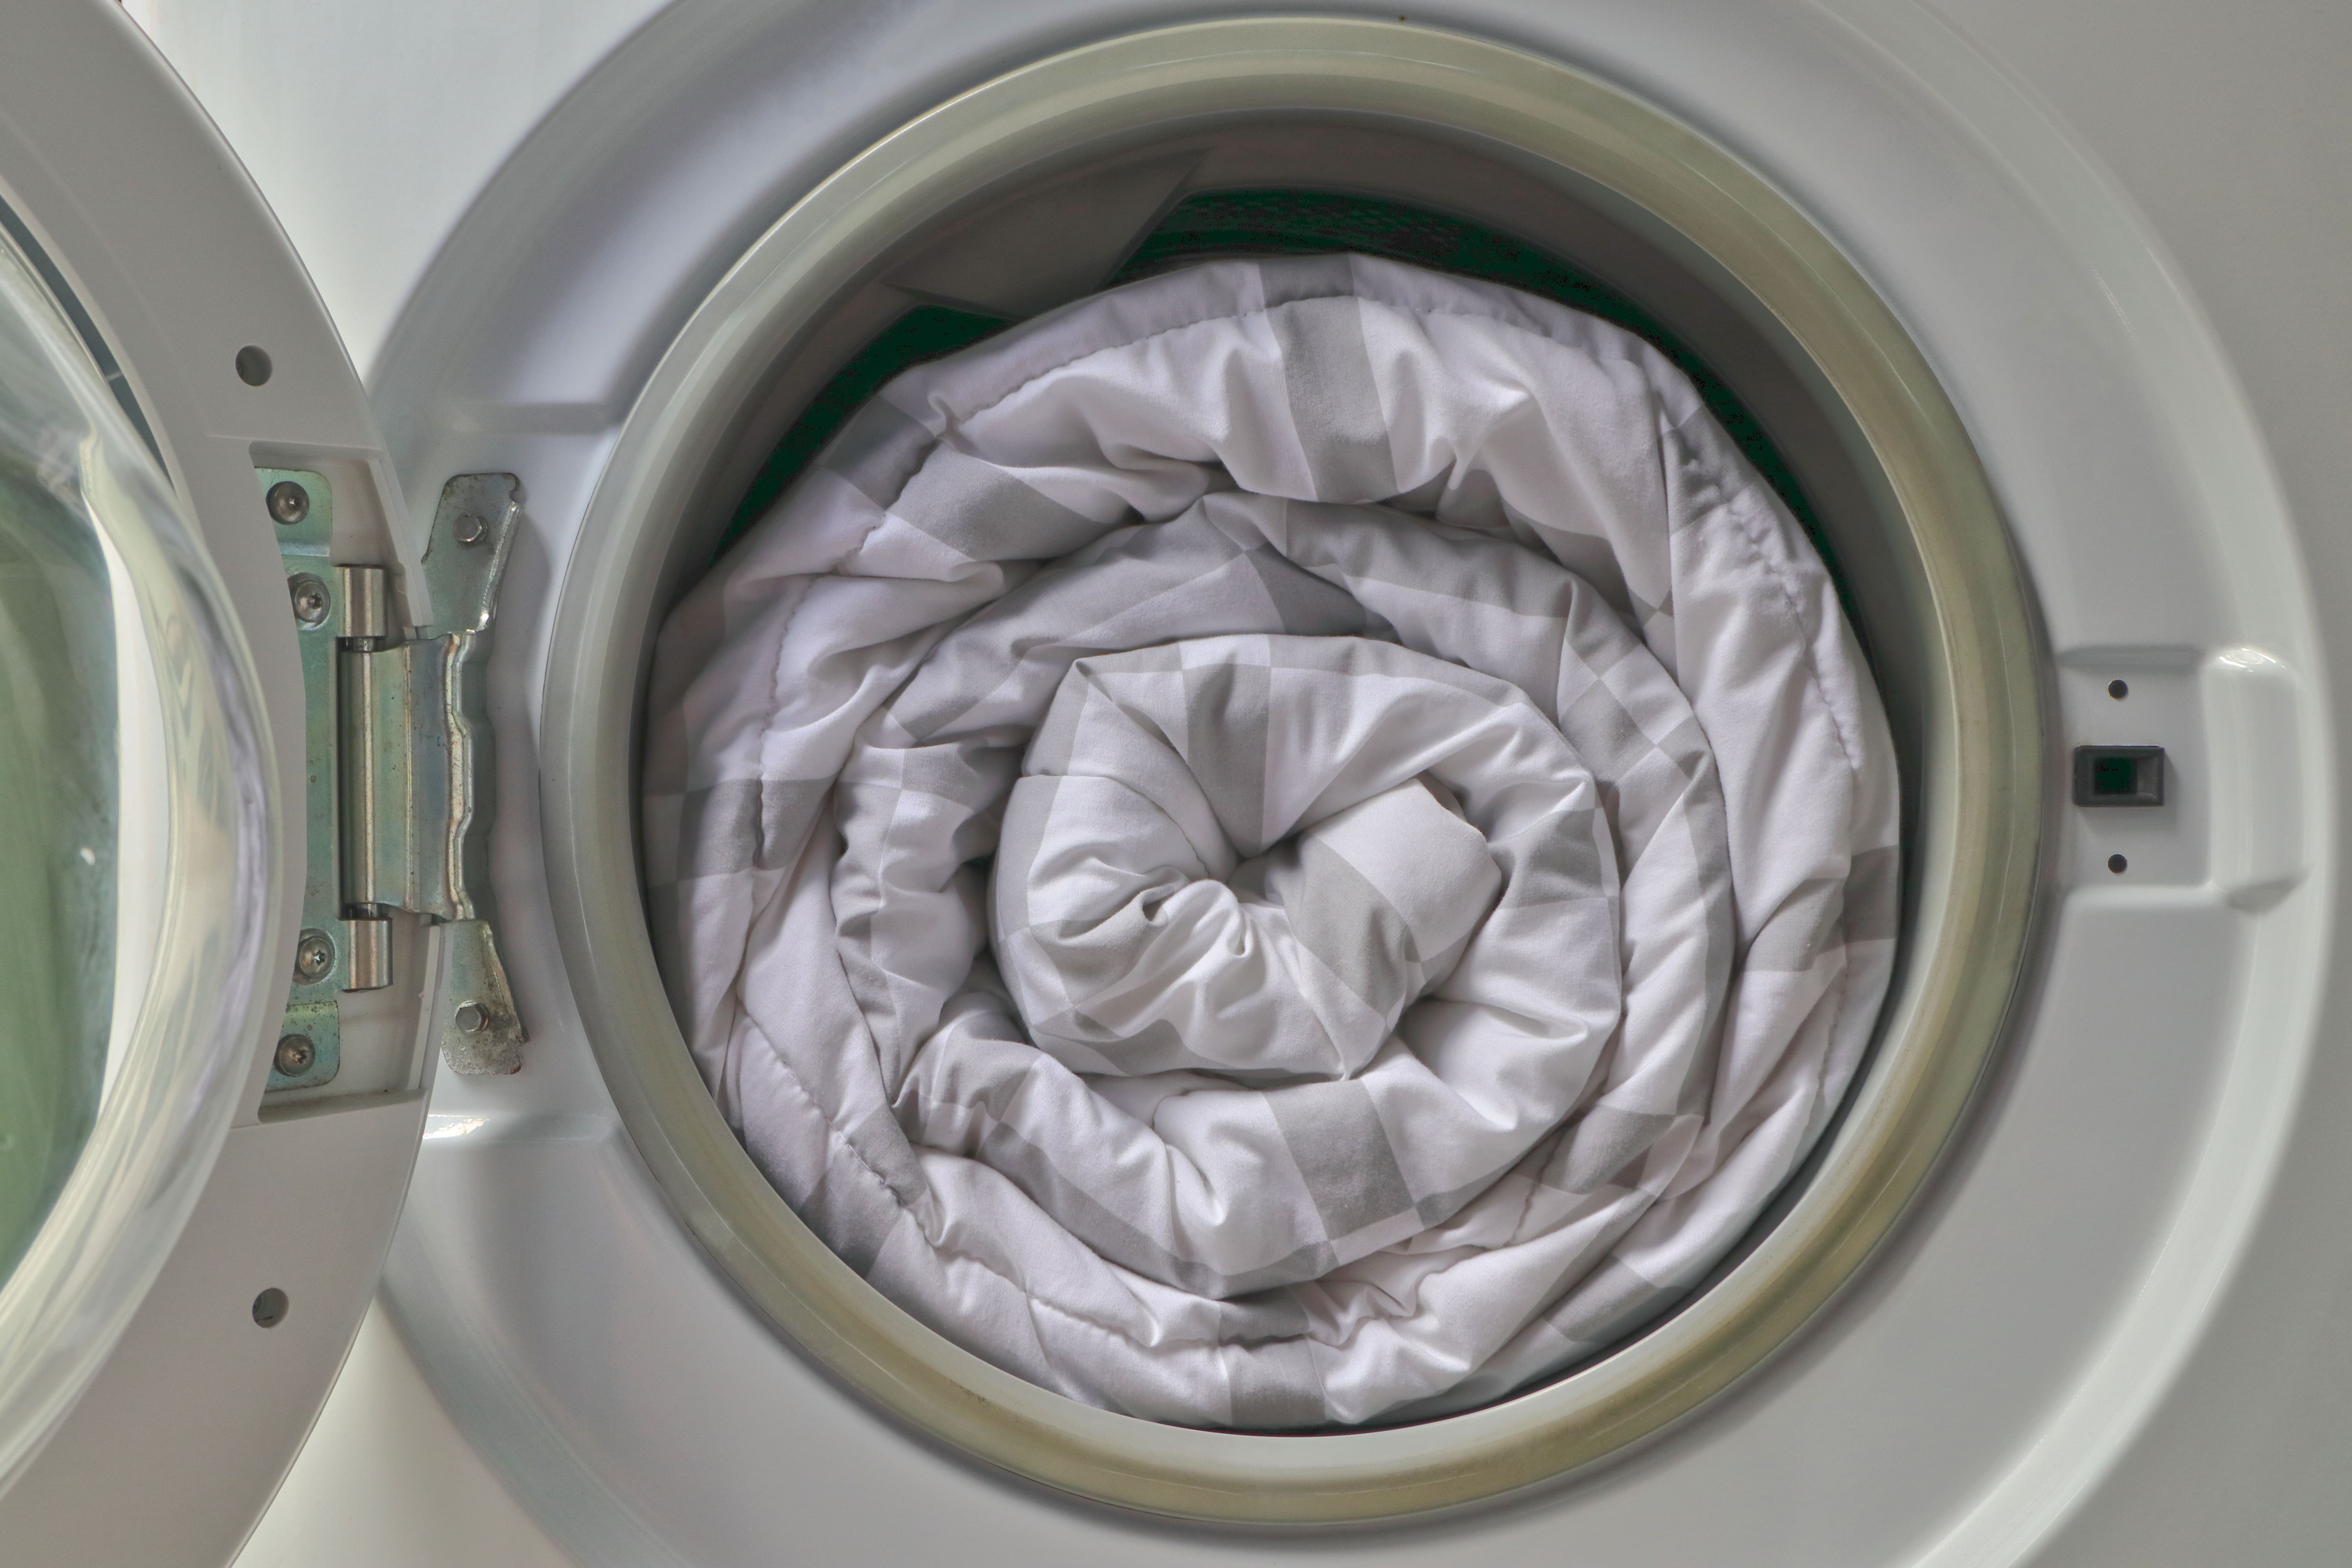 An open washing machine reveals a rolled up duvet inside.